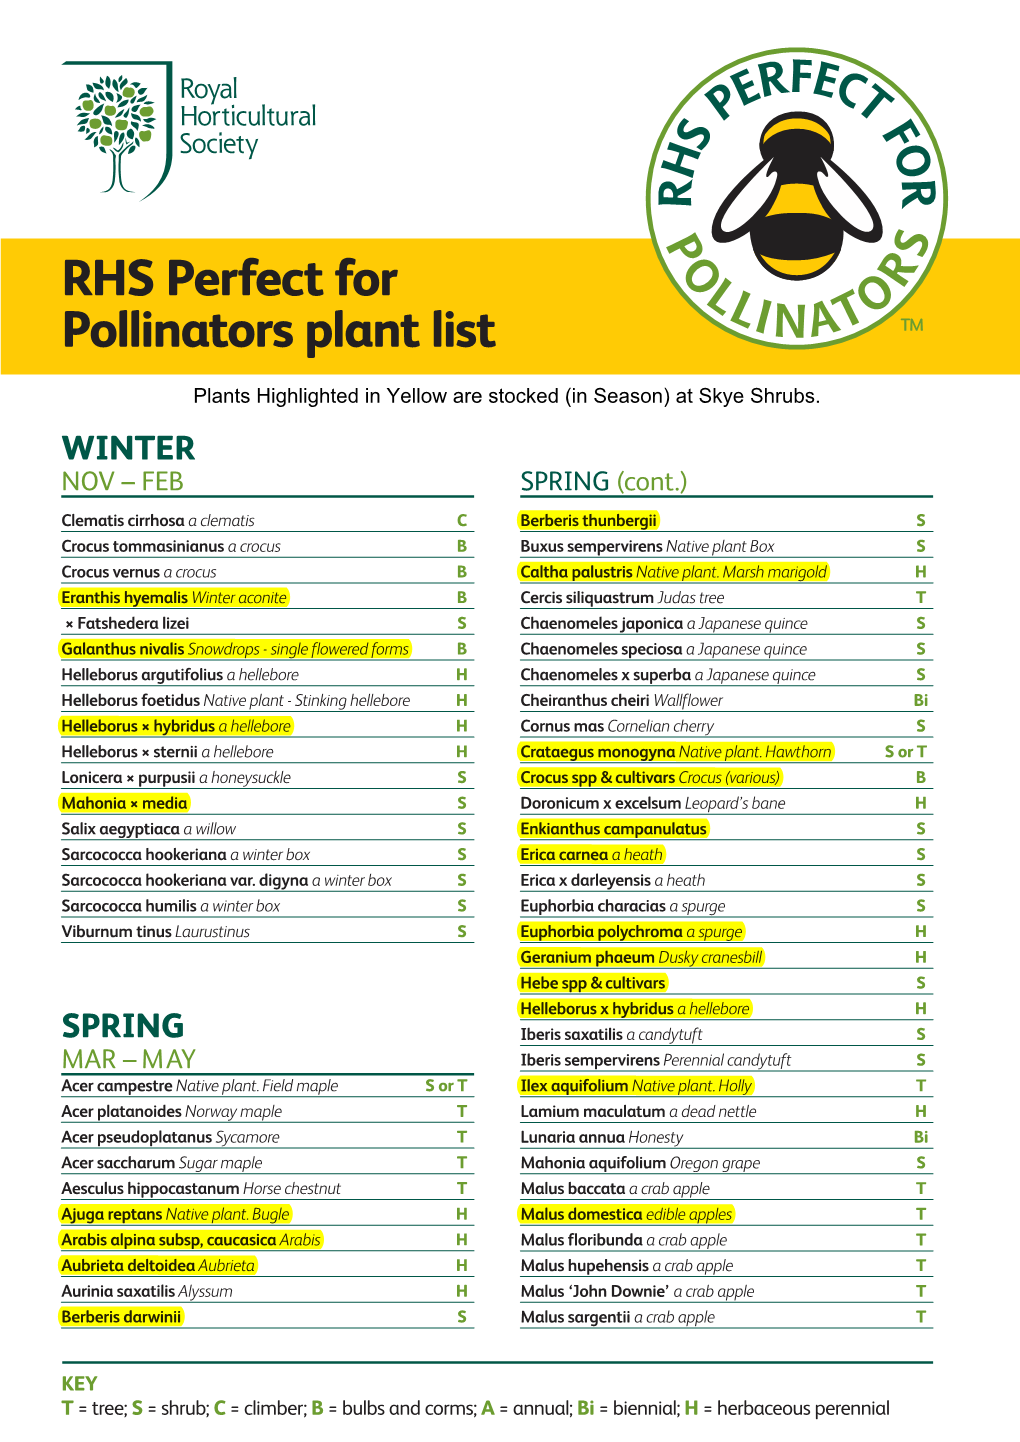 RHS Perfect for Pollinators Plant List